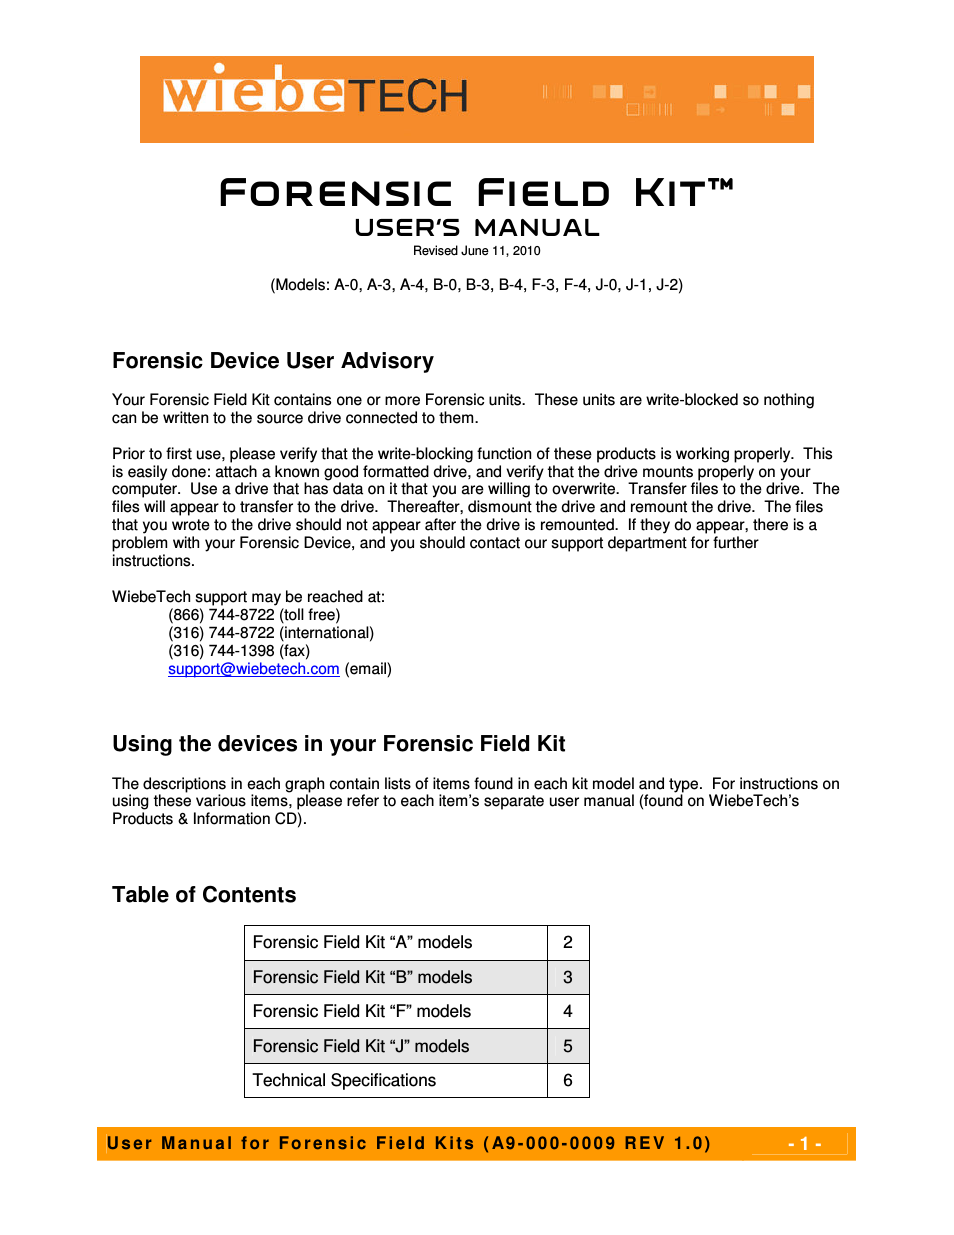 Forensic Field Kit B